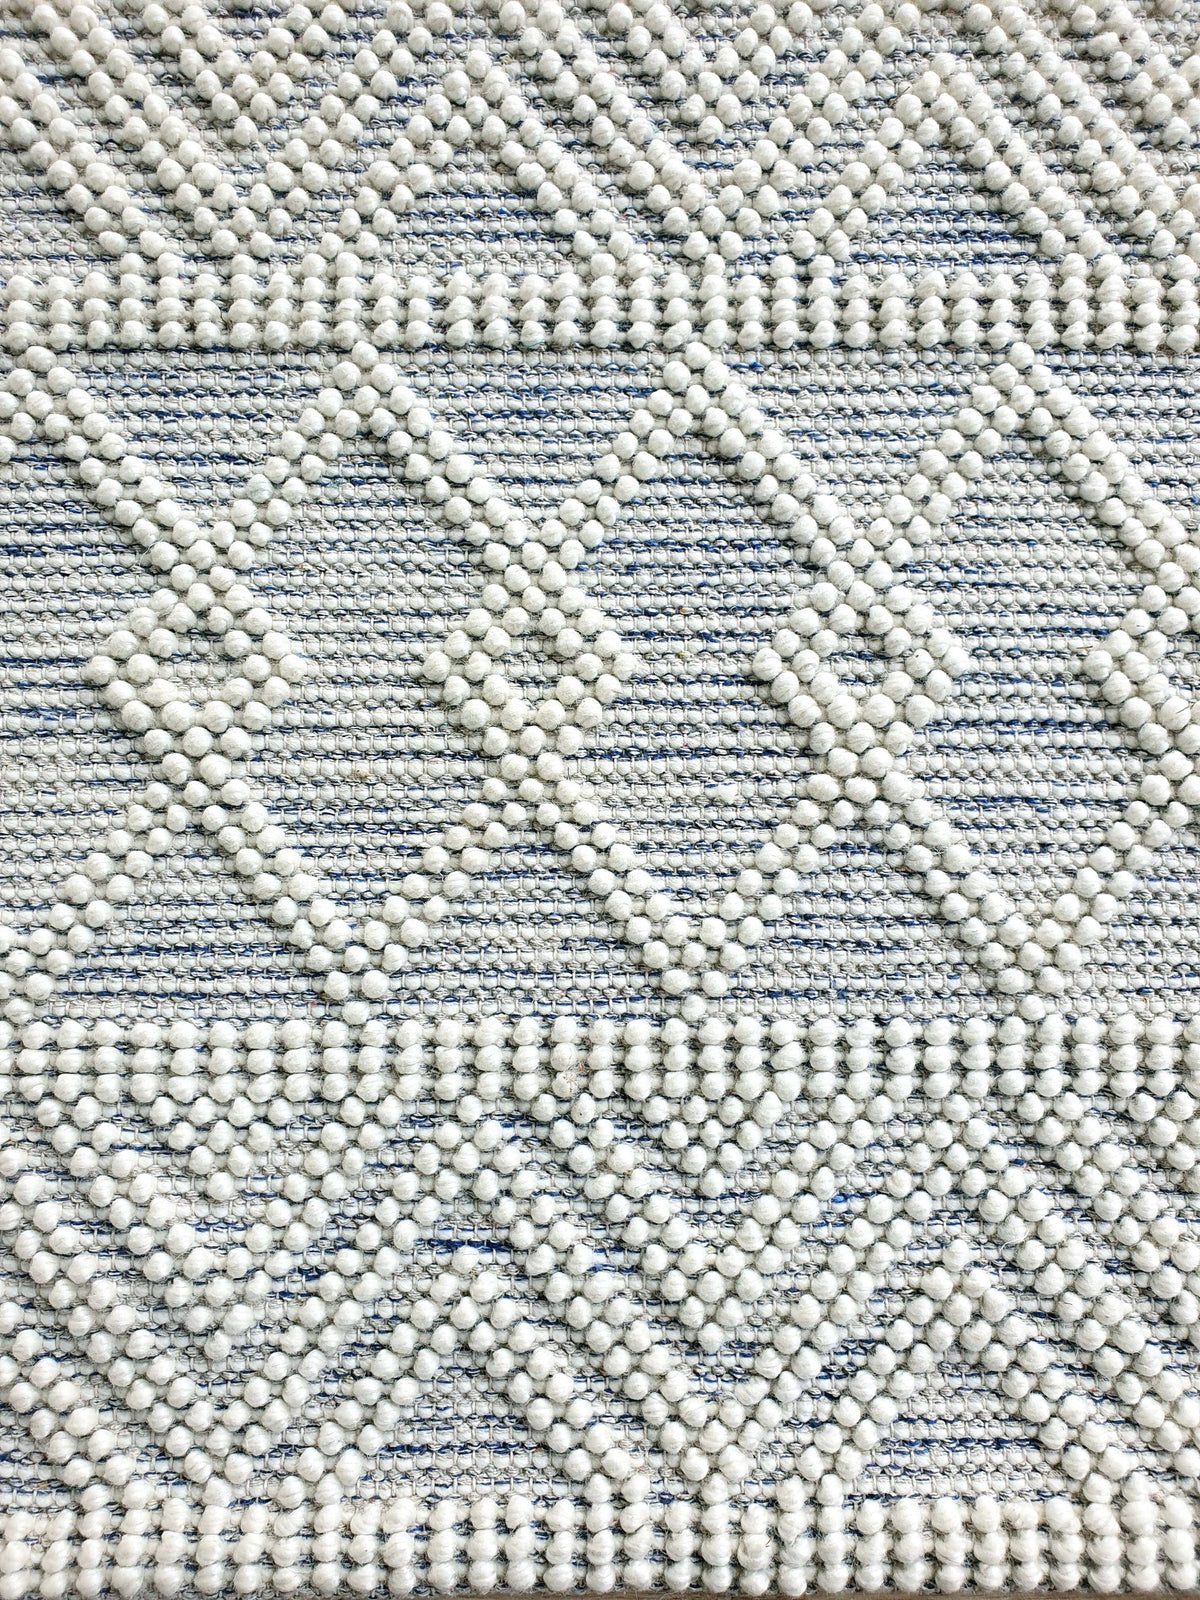 Handmade Woven Rug Natural & White Color Floor Rug (5 Sizes)